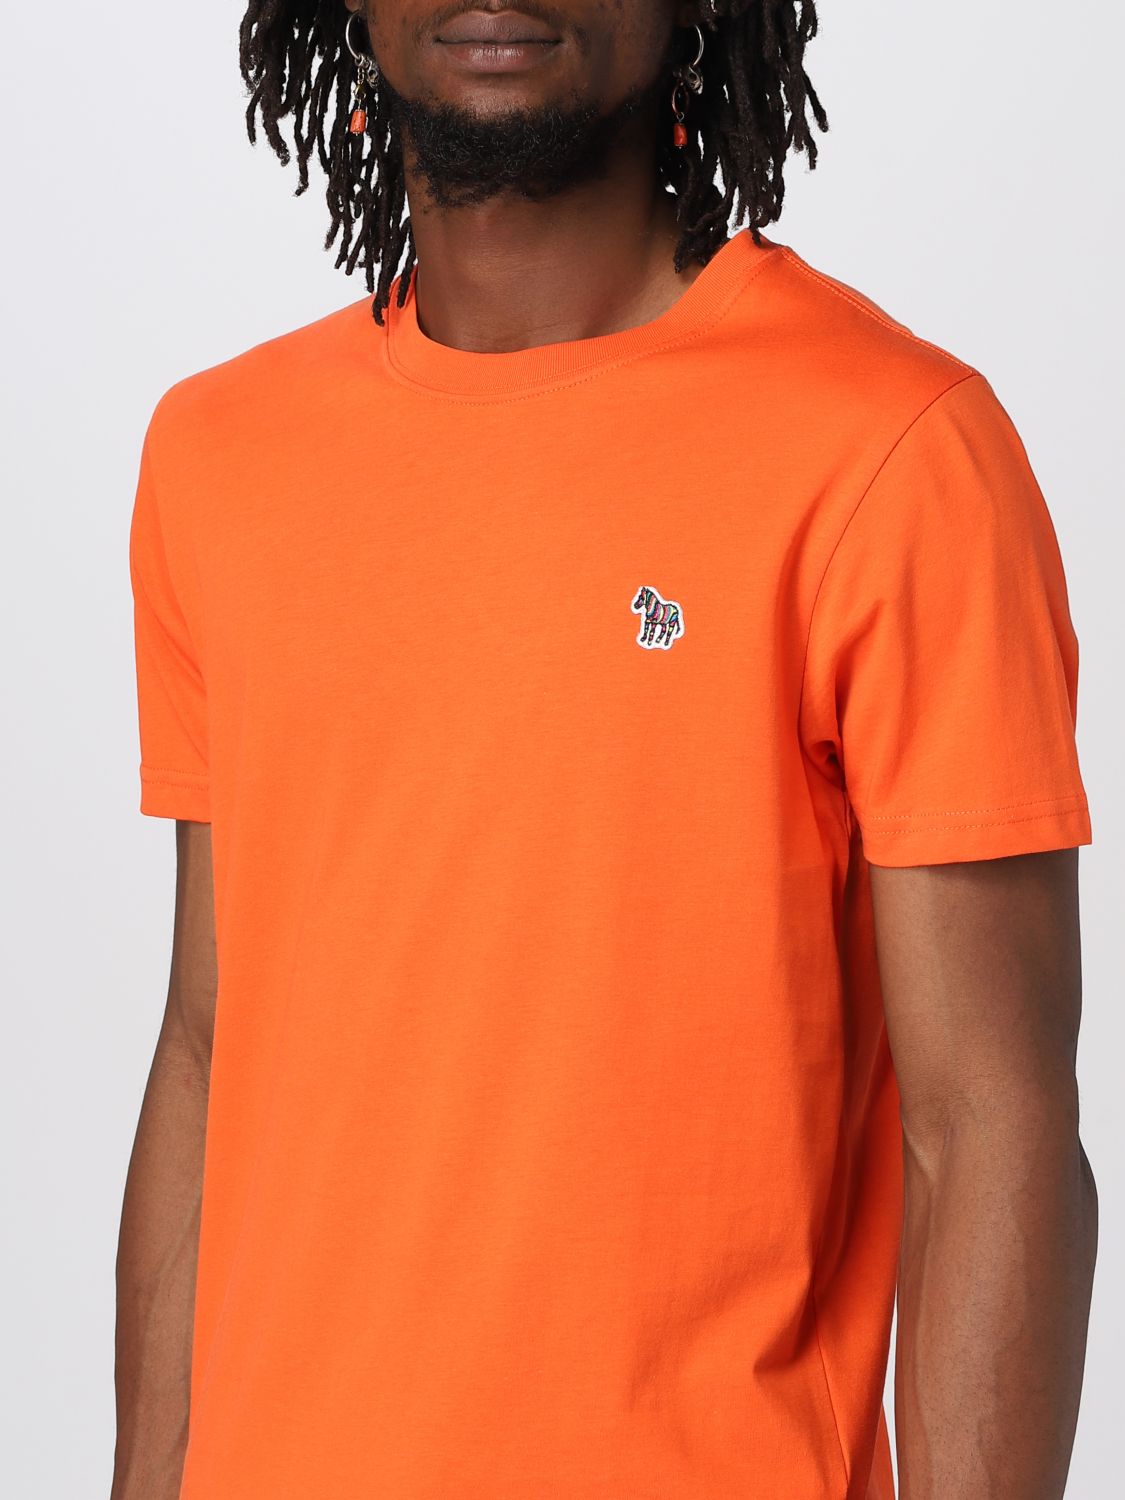 PS PAUL SMITH: t-shirt for man - Orange | Ps Paul Smith t-shirt ...